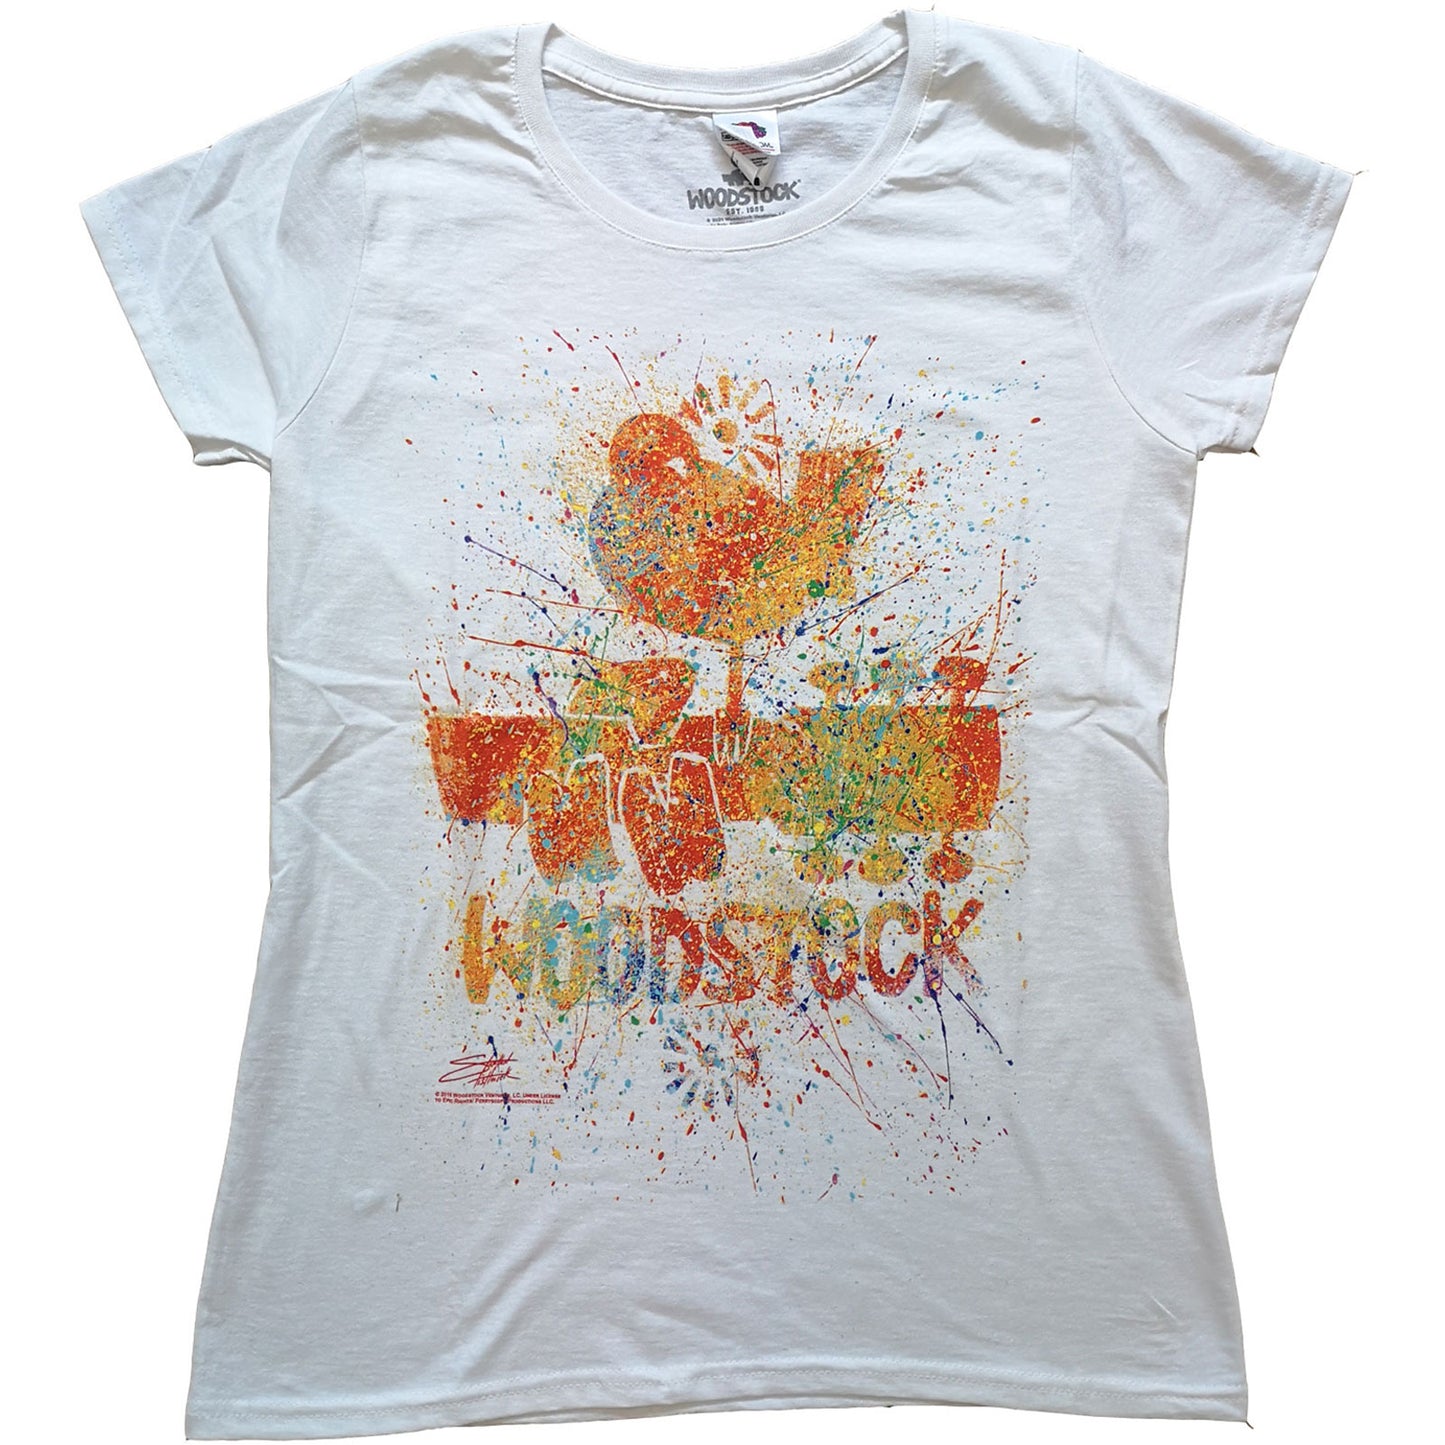 Woodstock Ladies T-Shirt: Splatter